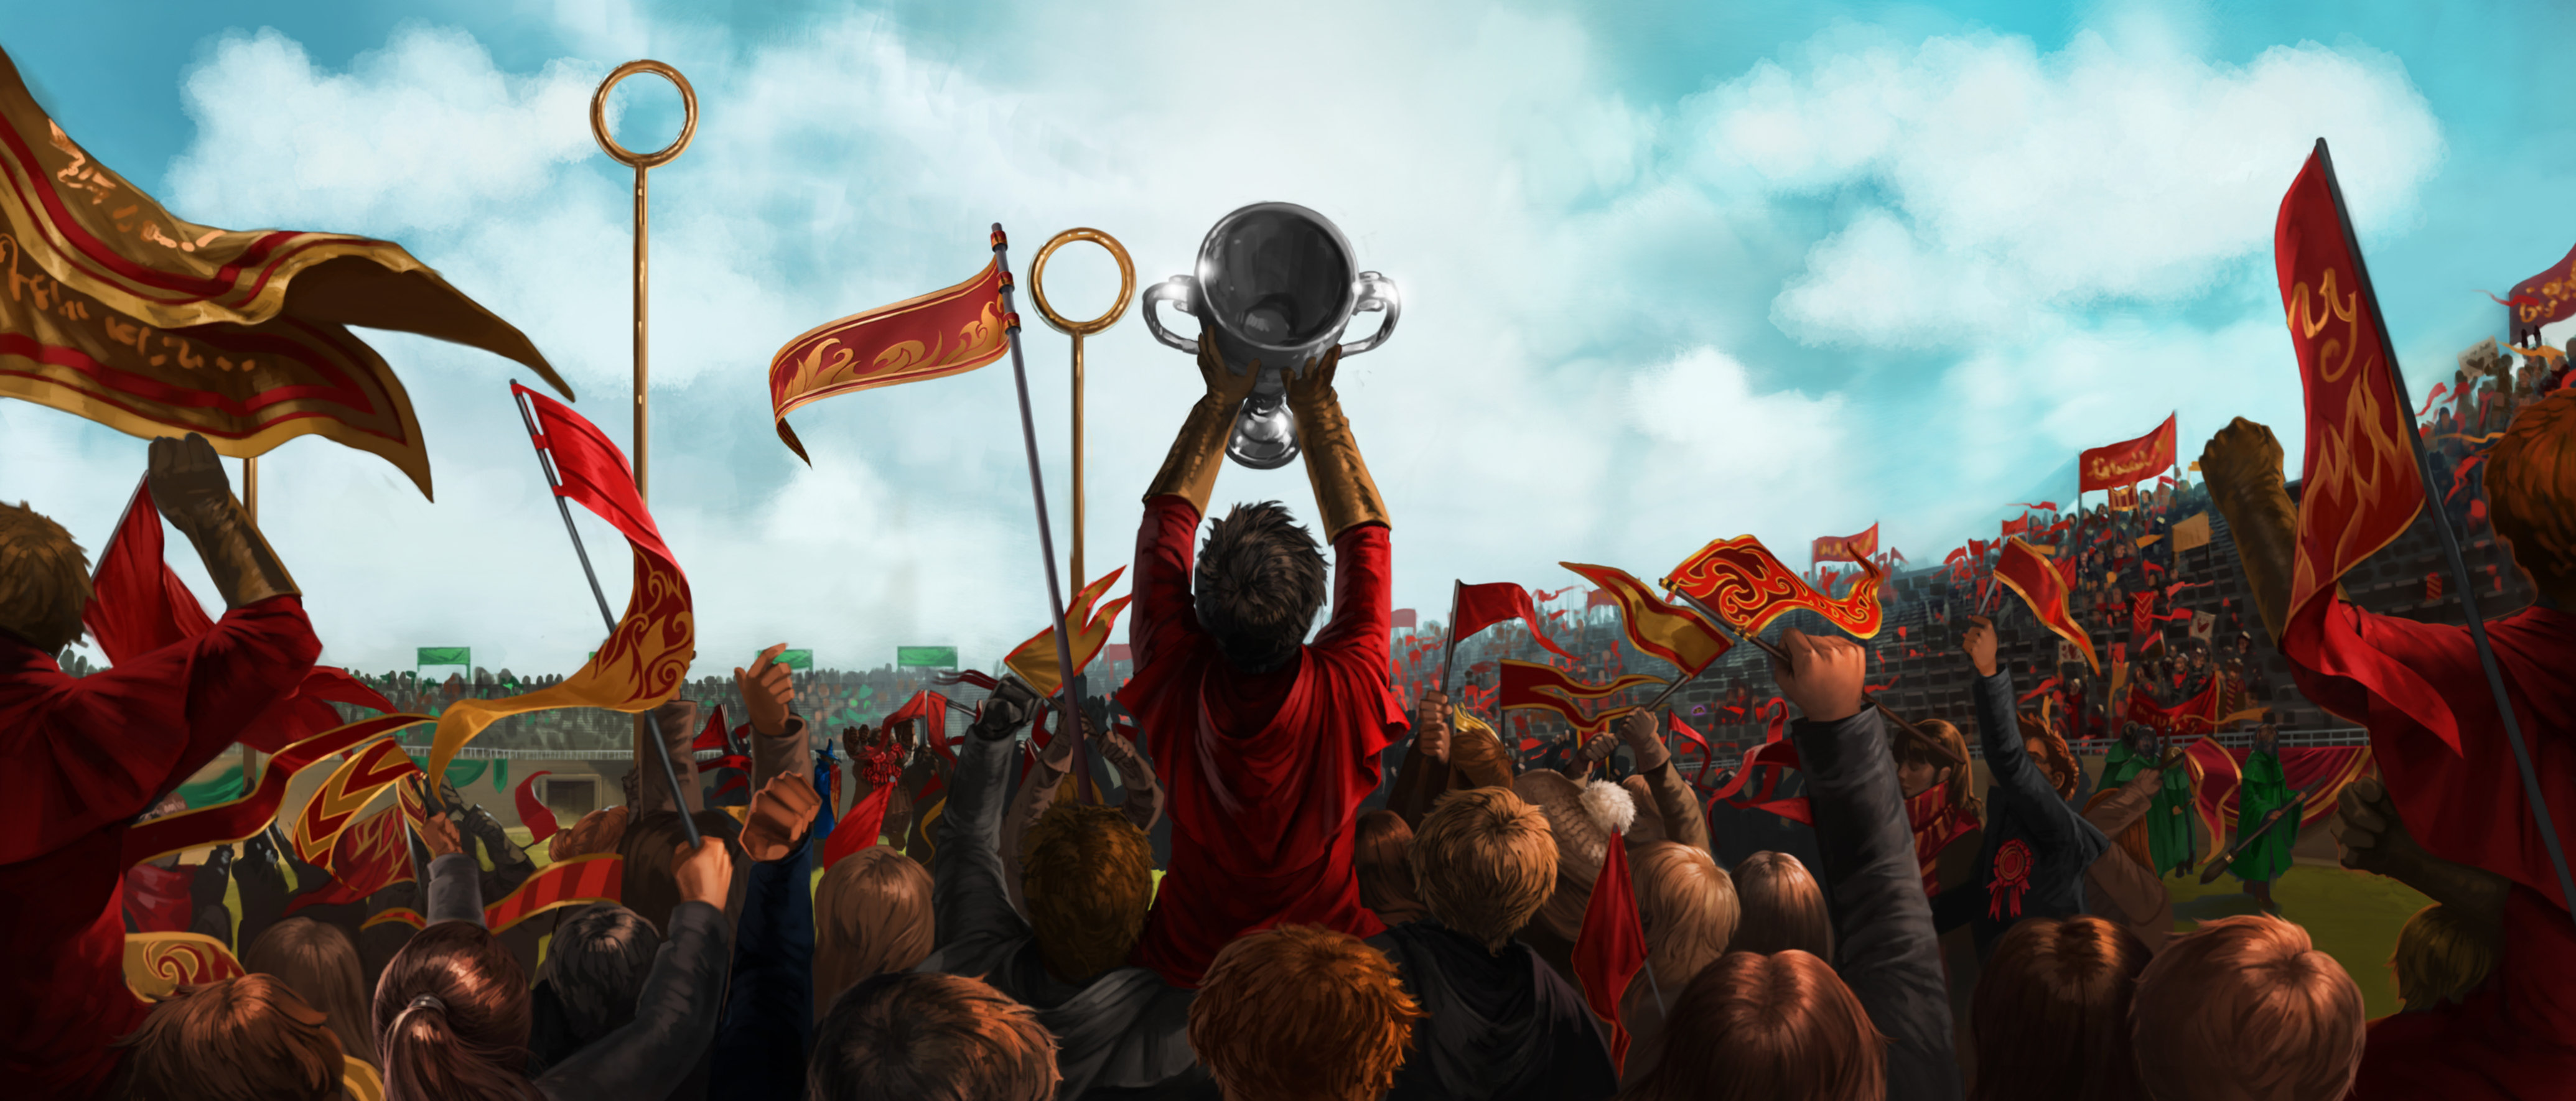 Gryffindor Wins the Quidditch Cup by Atomhawk